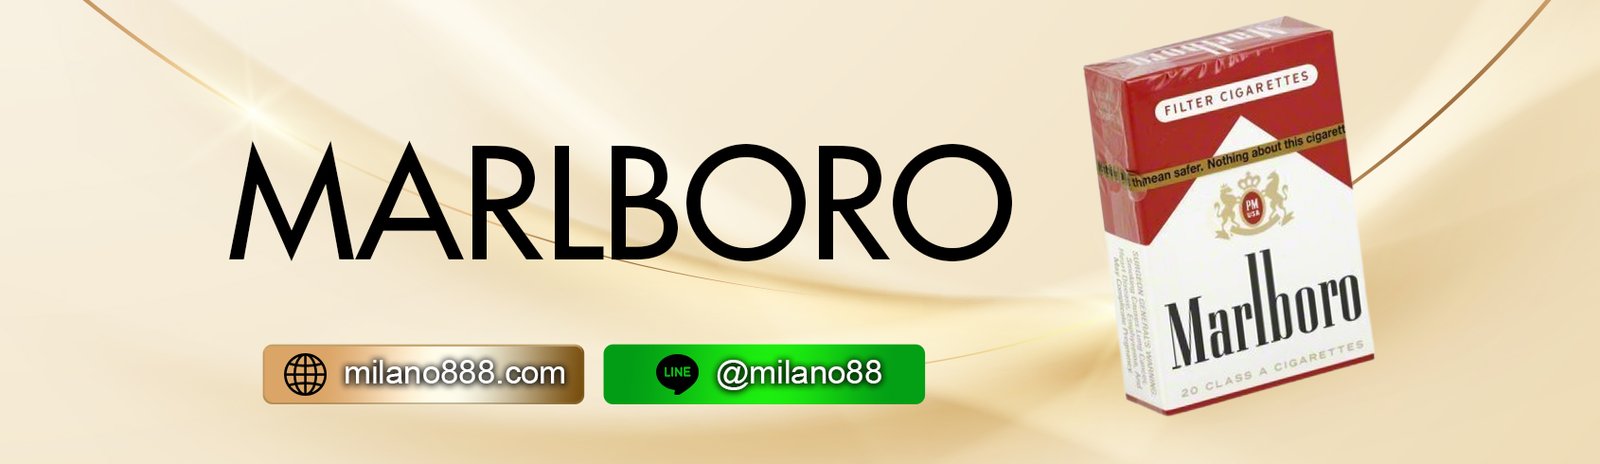 milano888 banner4